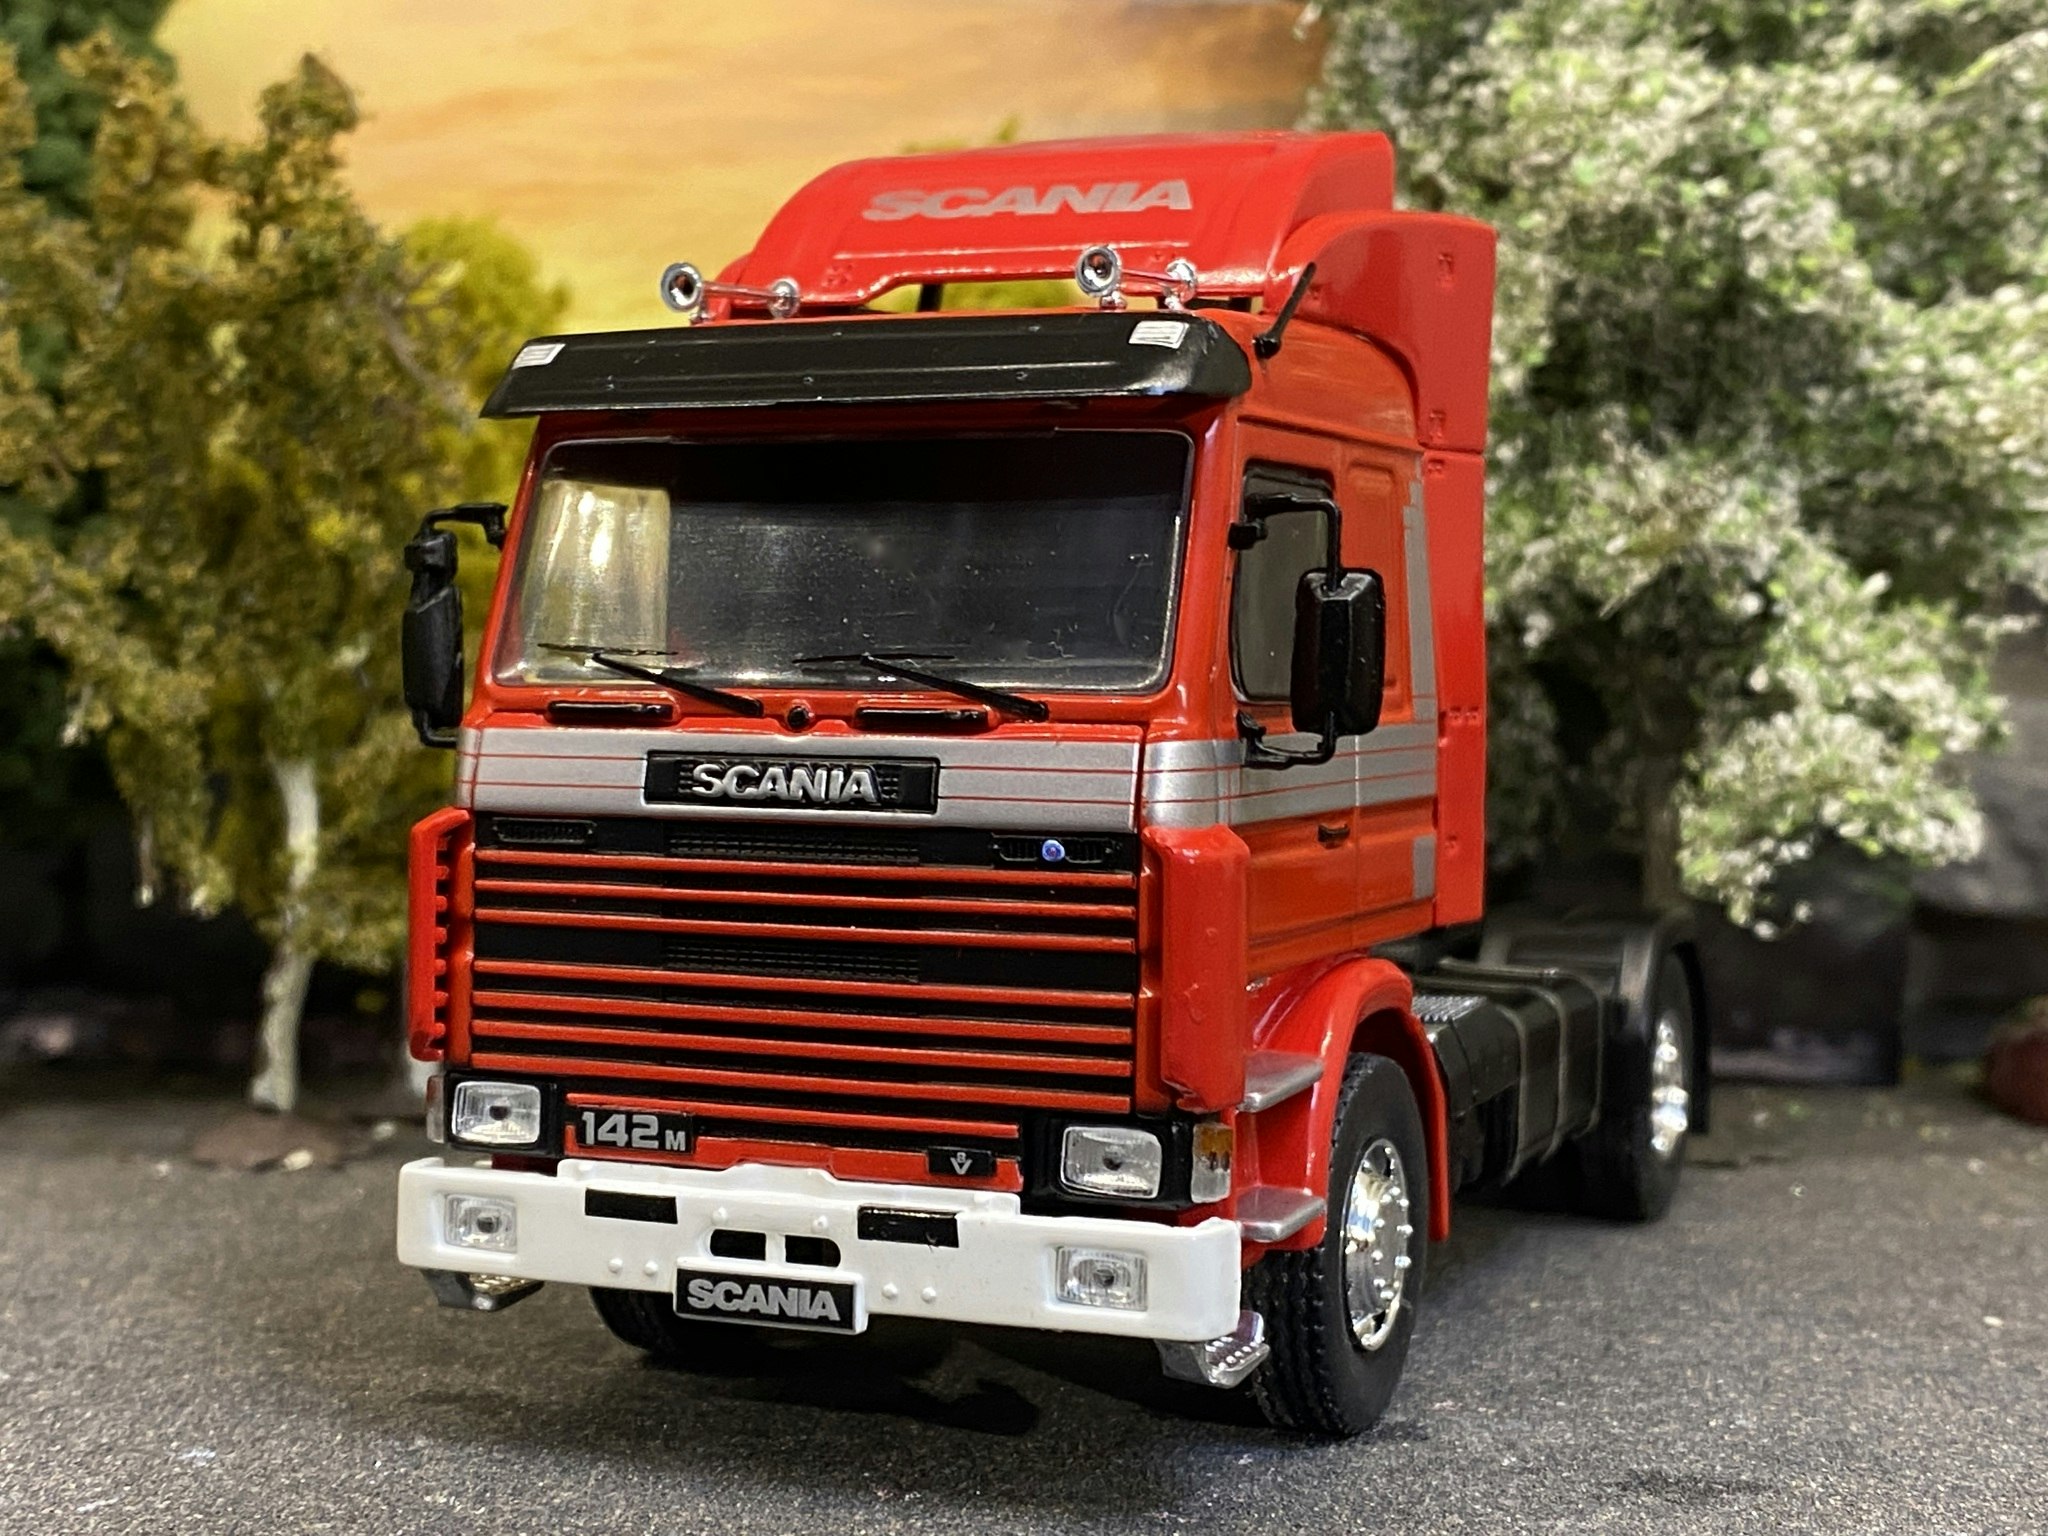 Skala 1/43 Scania 142M, Red with stipes fr IXO Models